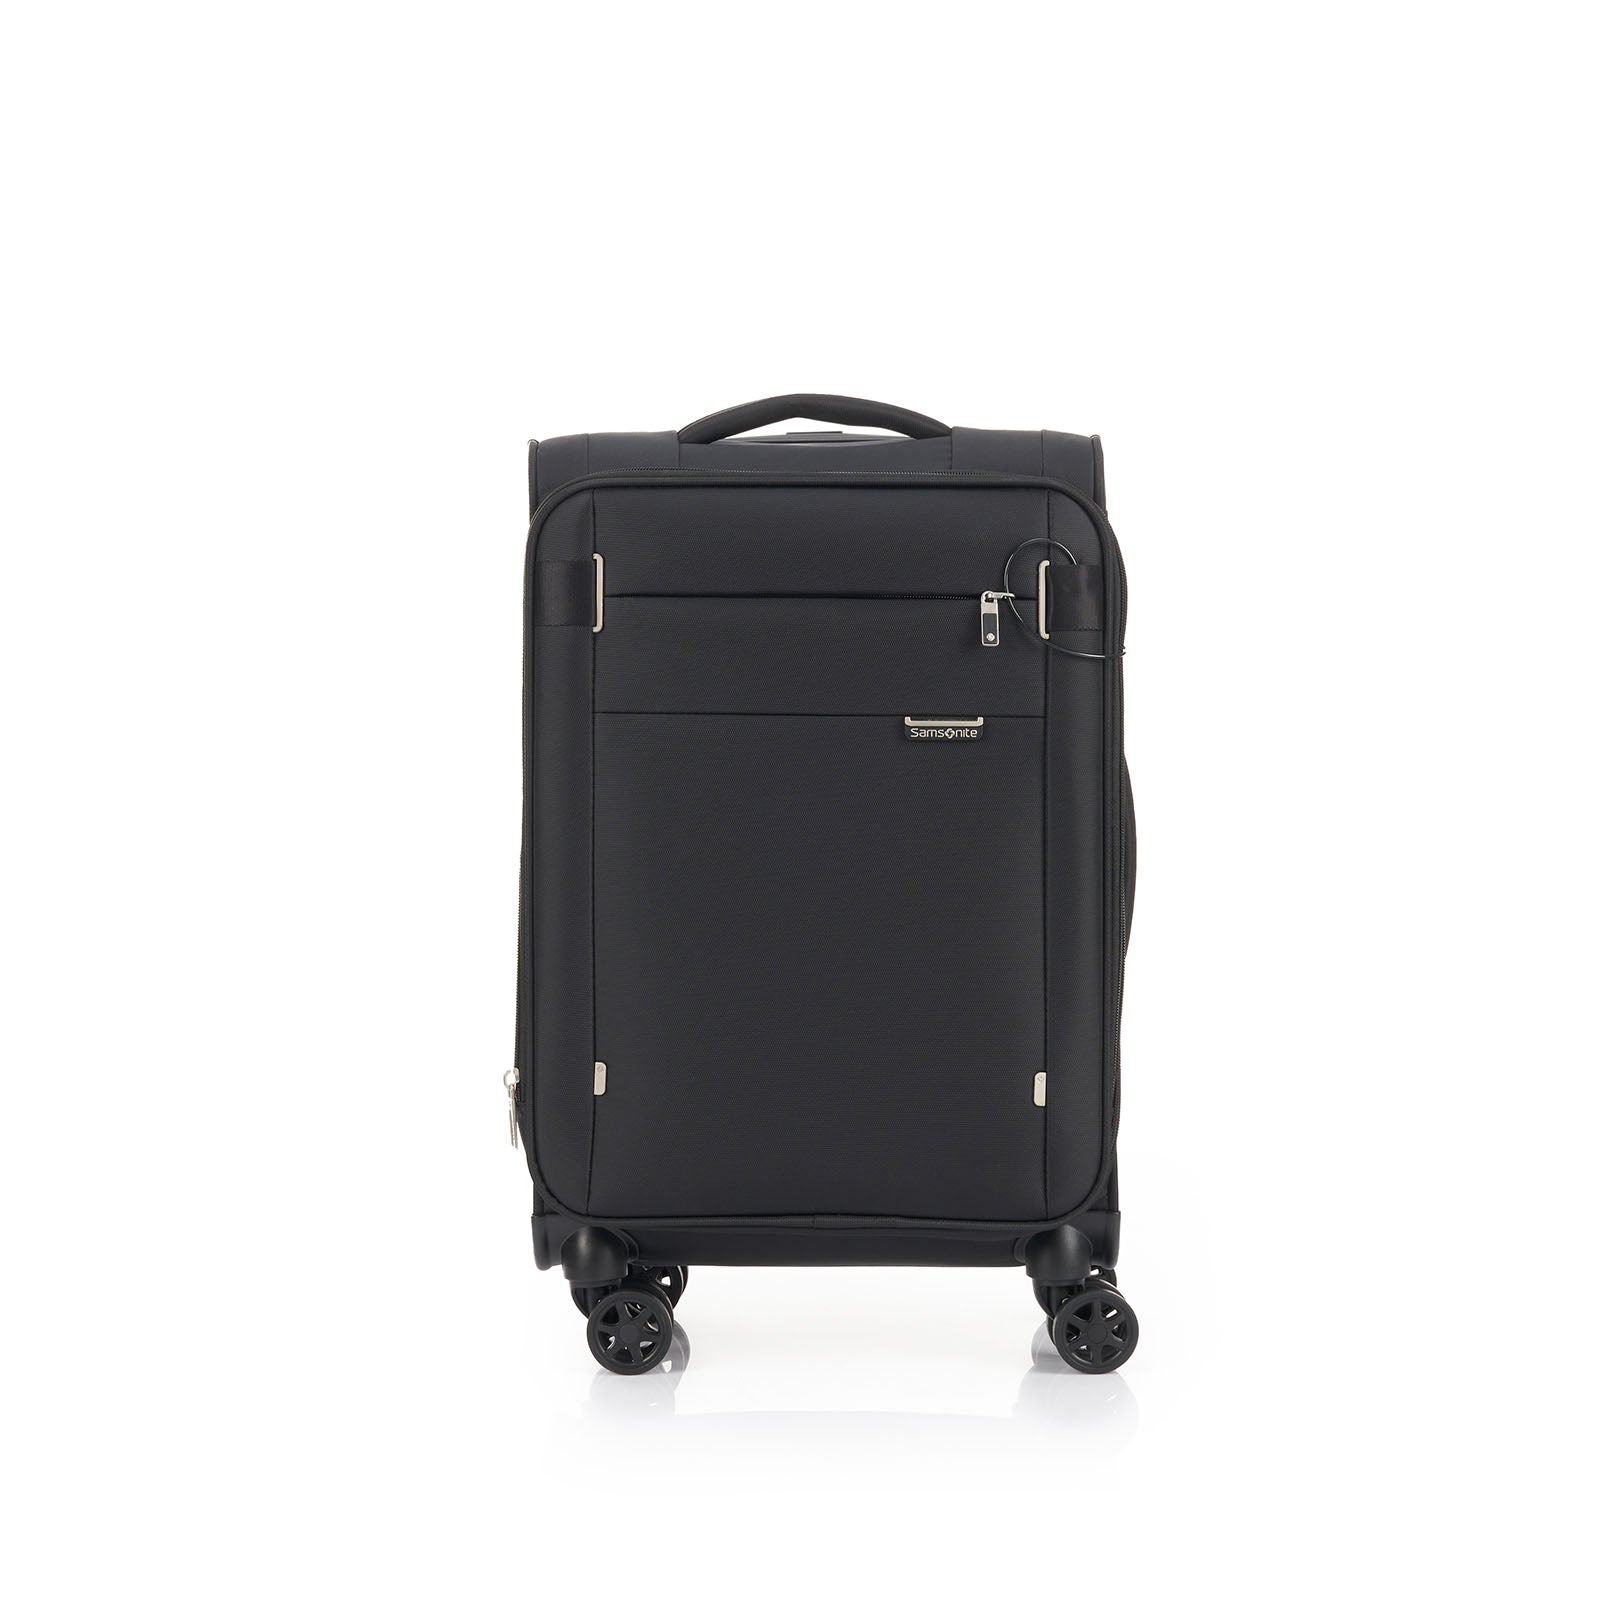 Samsonite-City-Rhythm-Carry-On-55cm-Suitcase-Black-Front